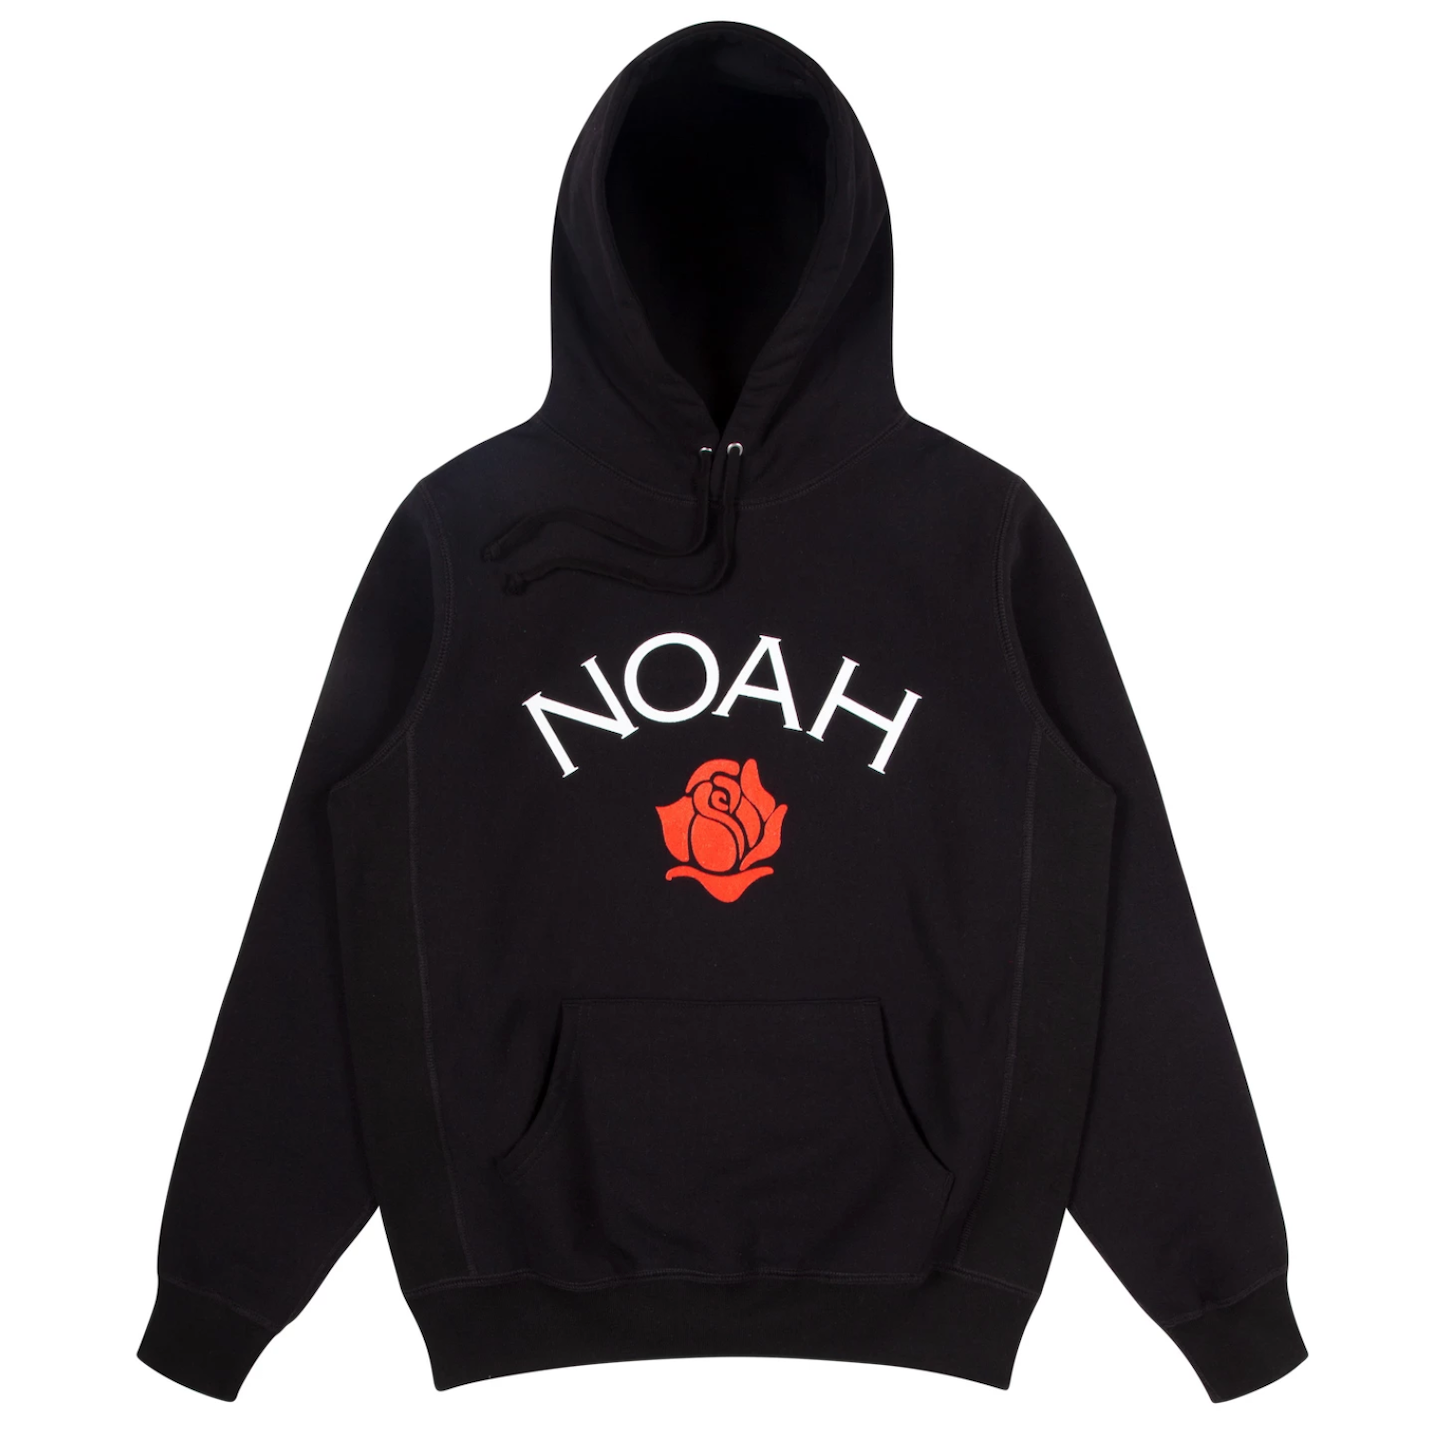 現貨 Noah NY Rose Logo Hoodie - Black